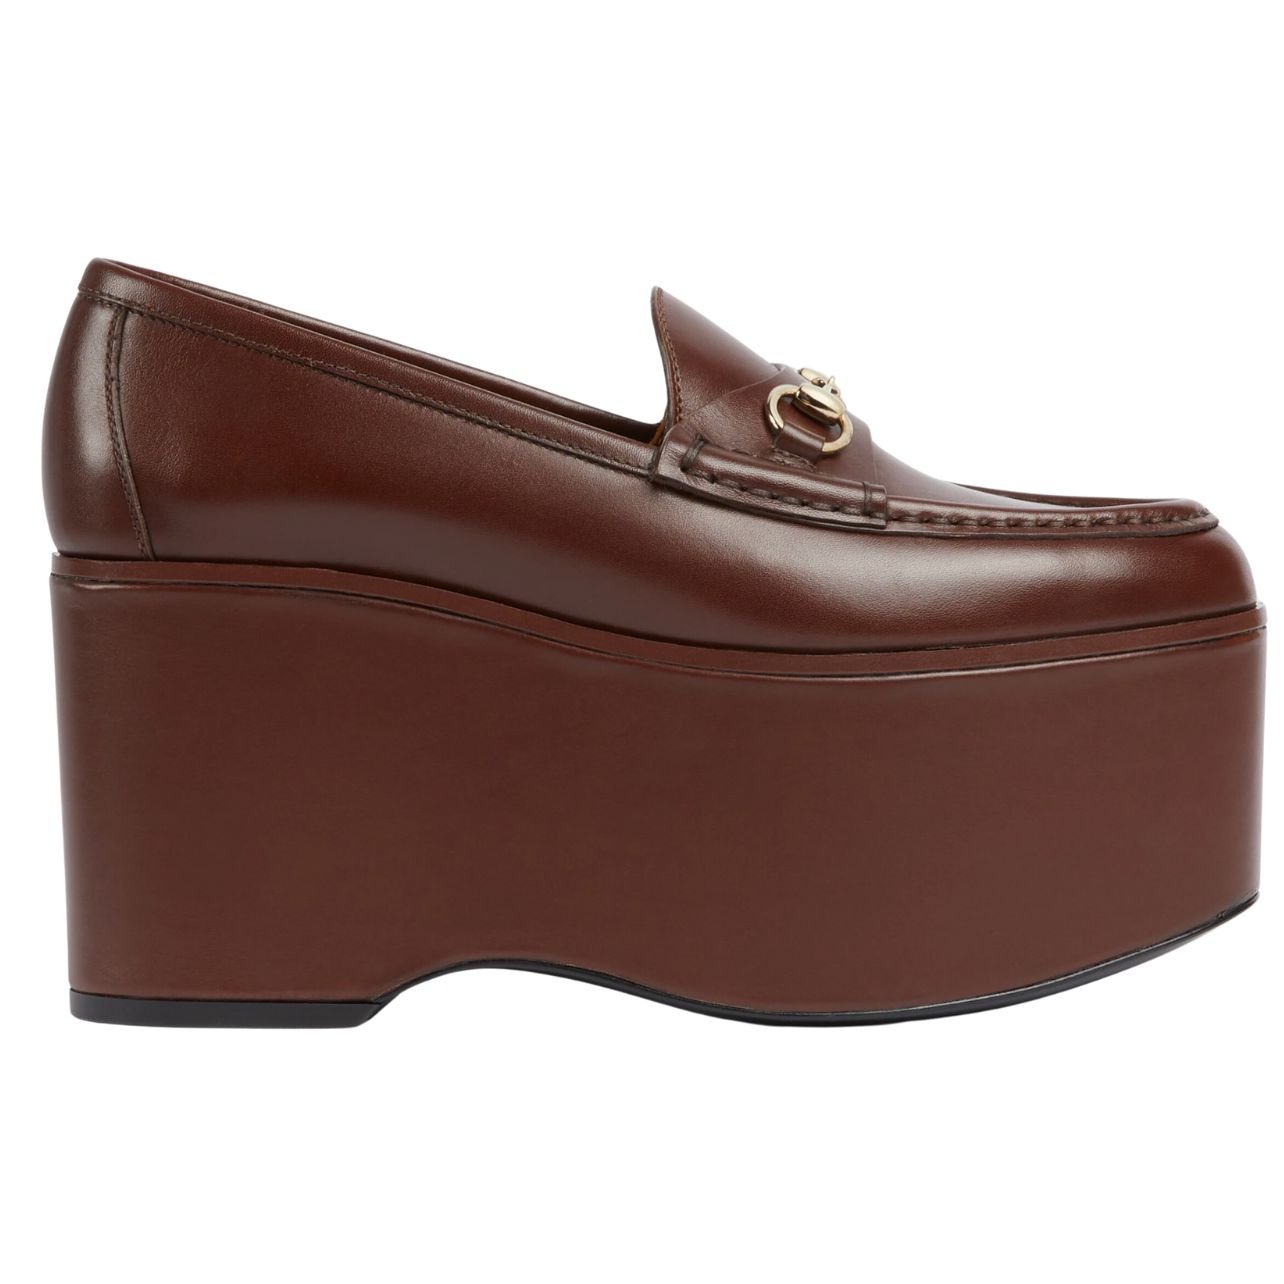 Gucci platform loafers in dark brown leather